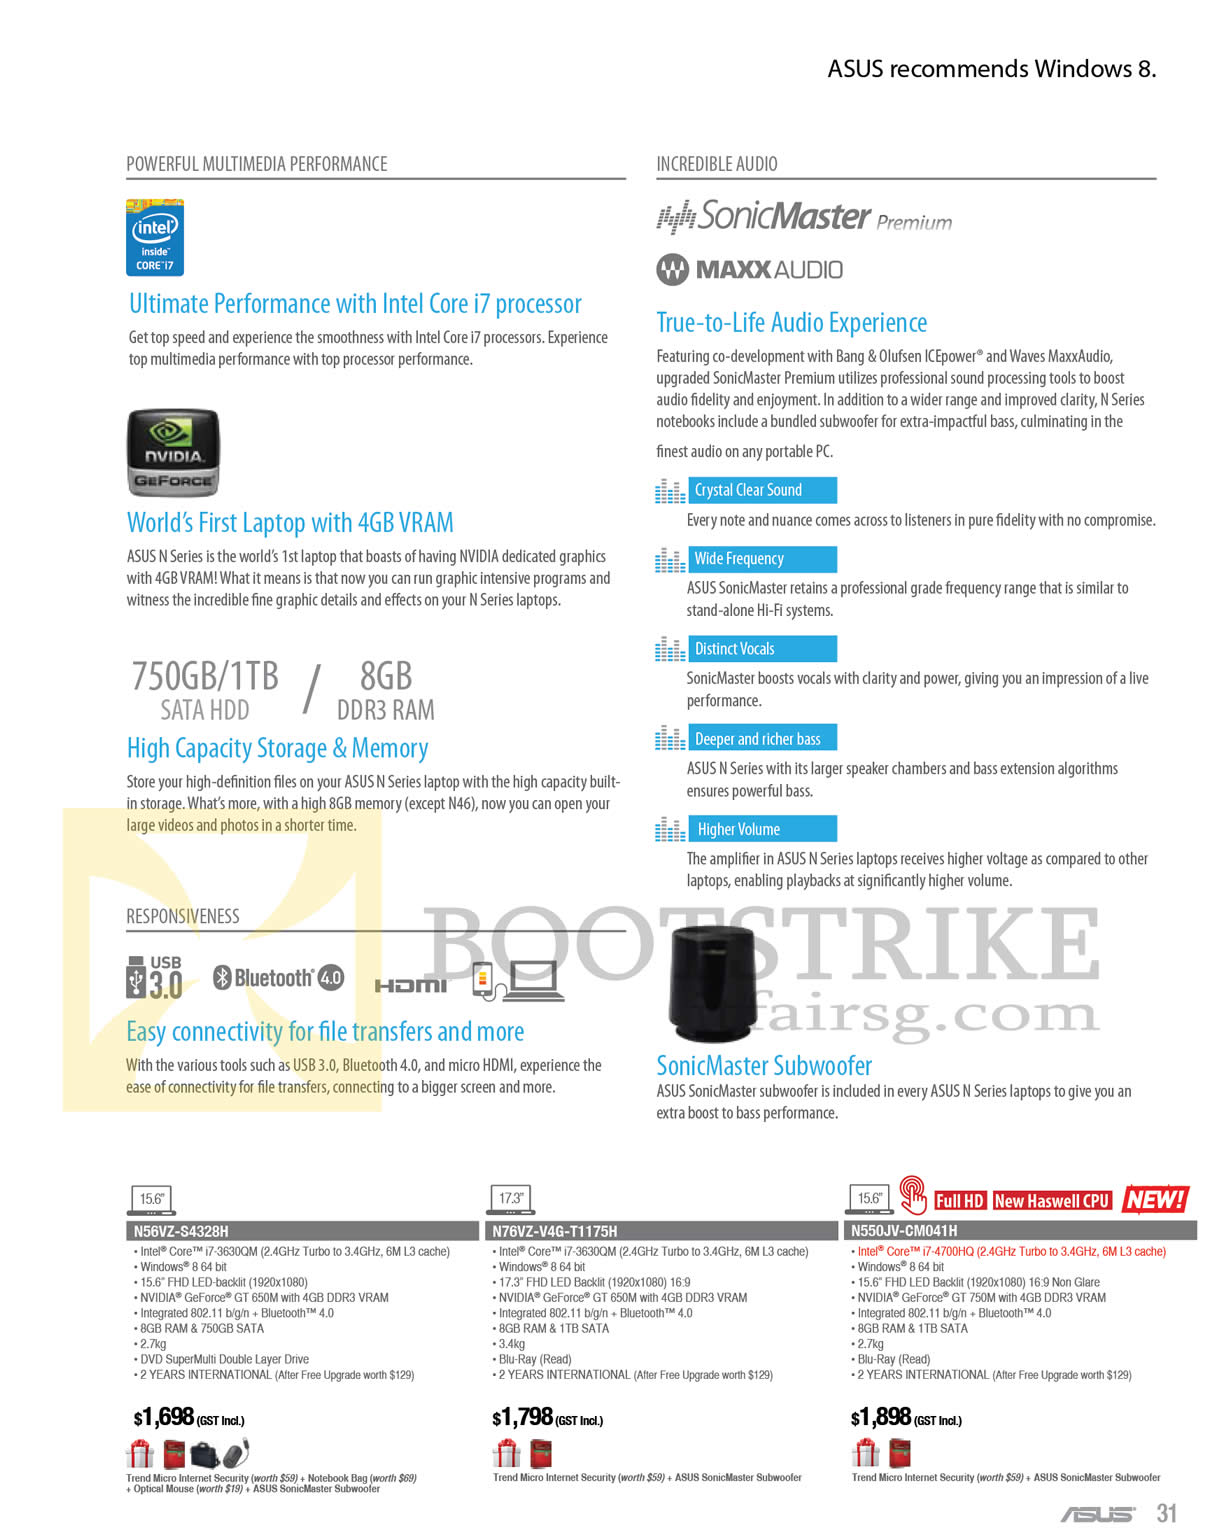 PC SHOW 2013 price list image brochure of ASUS Notebooks N Series Features, N56VZ-S4328H, N76VZ-V4G-T1175H, N550JV-CM041H, Subwoofer